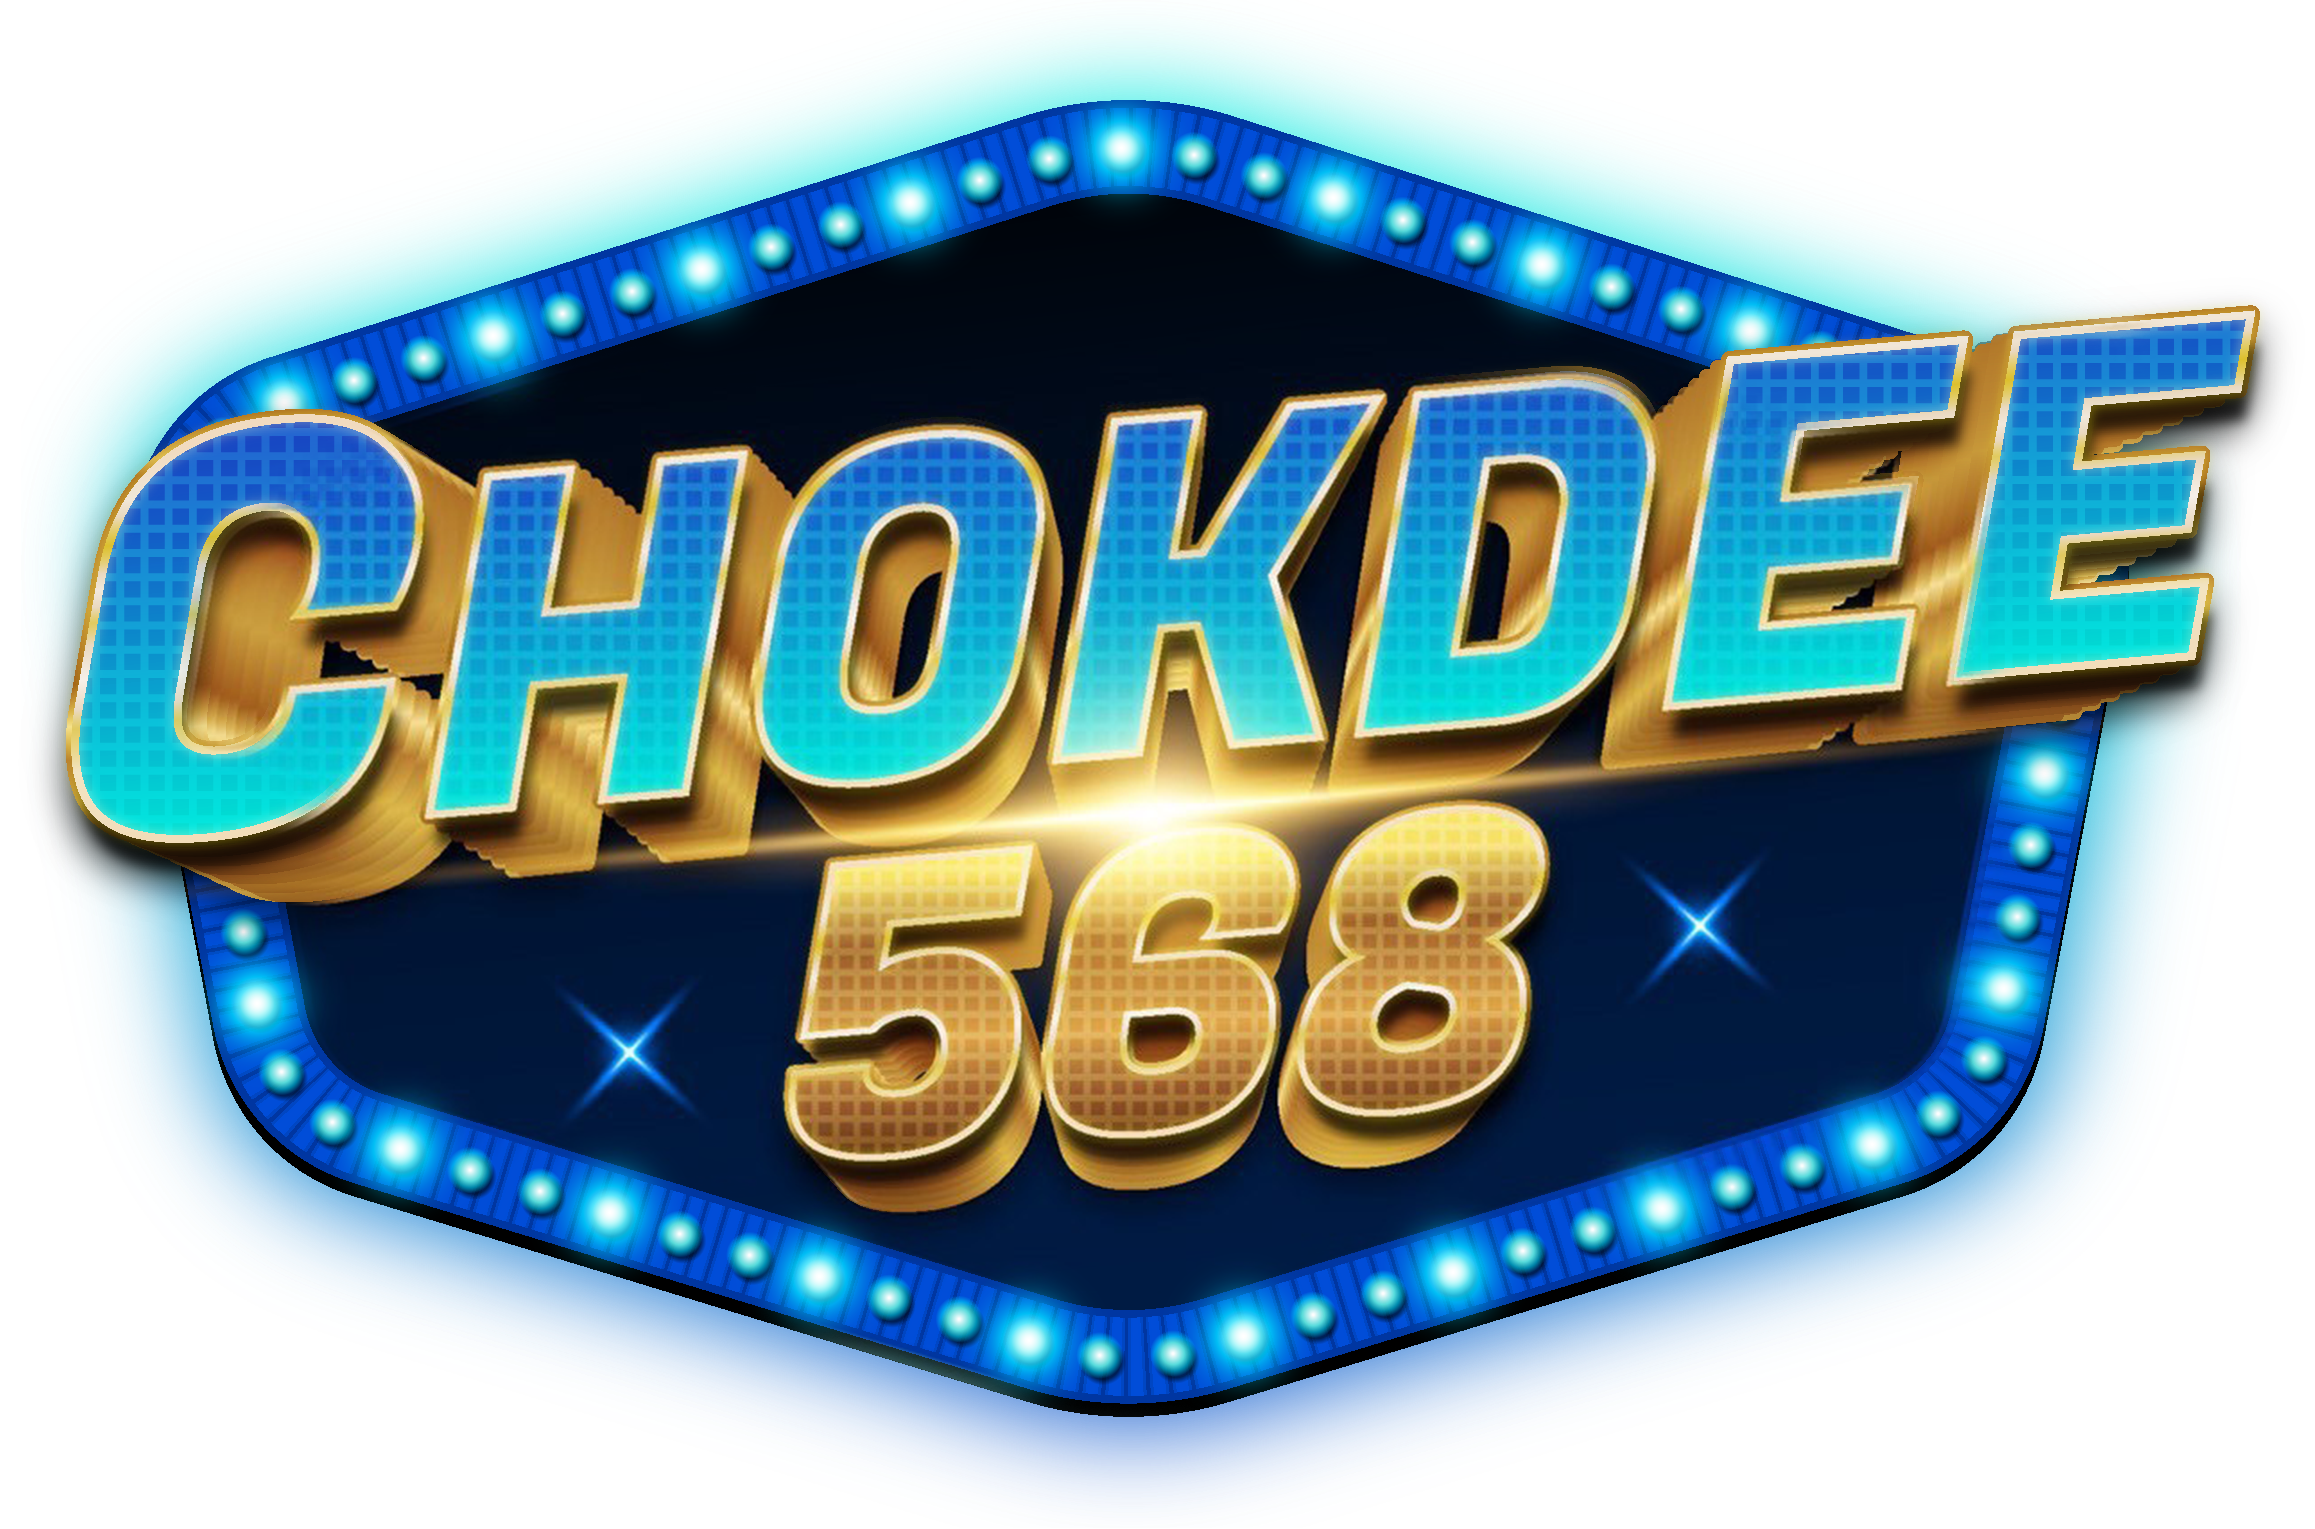 chokdee568